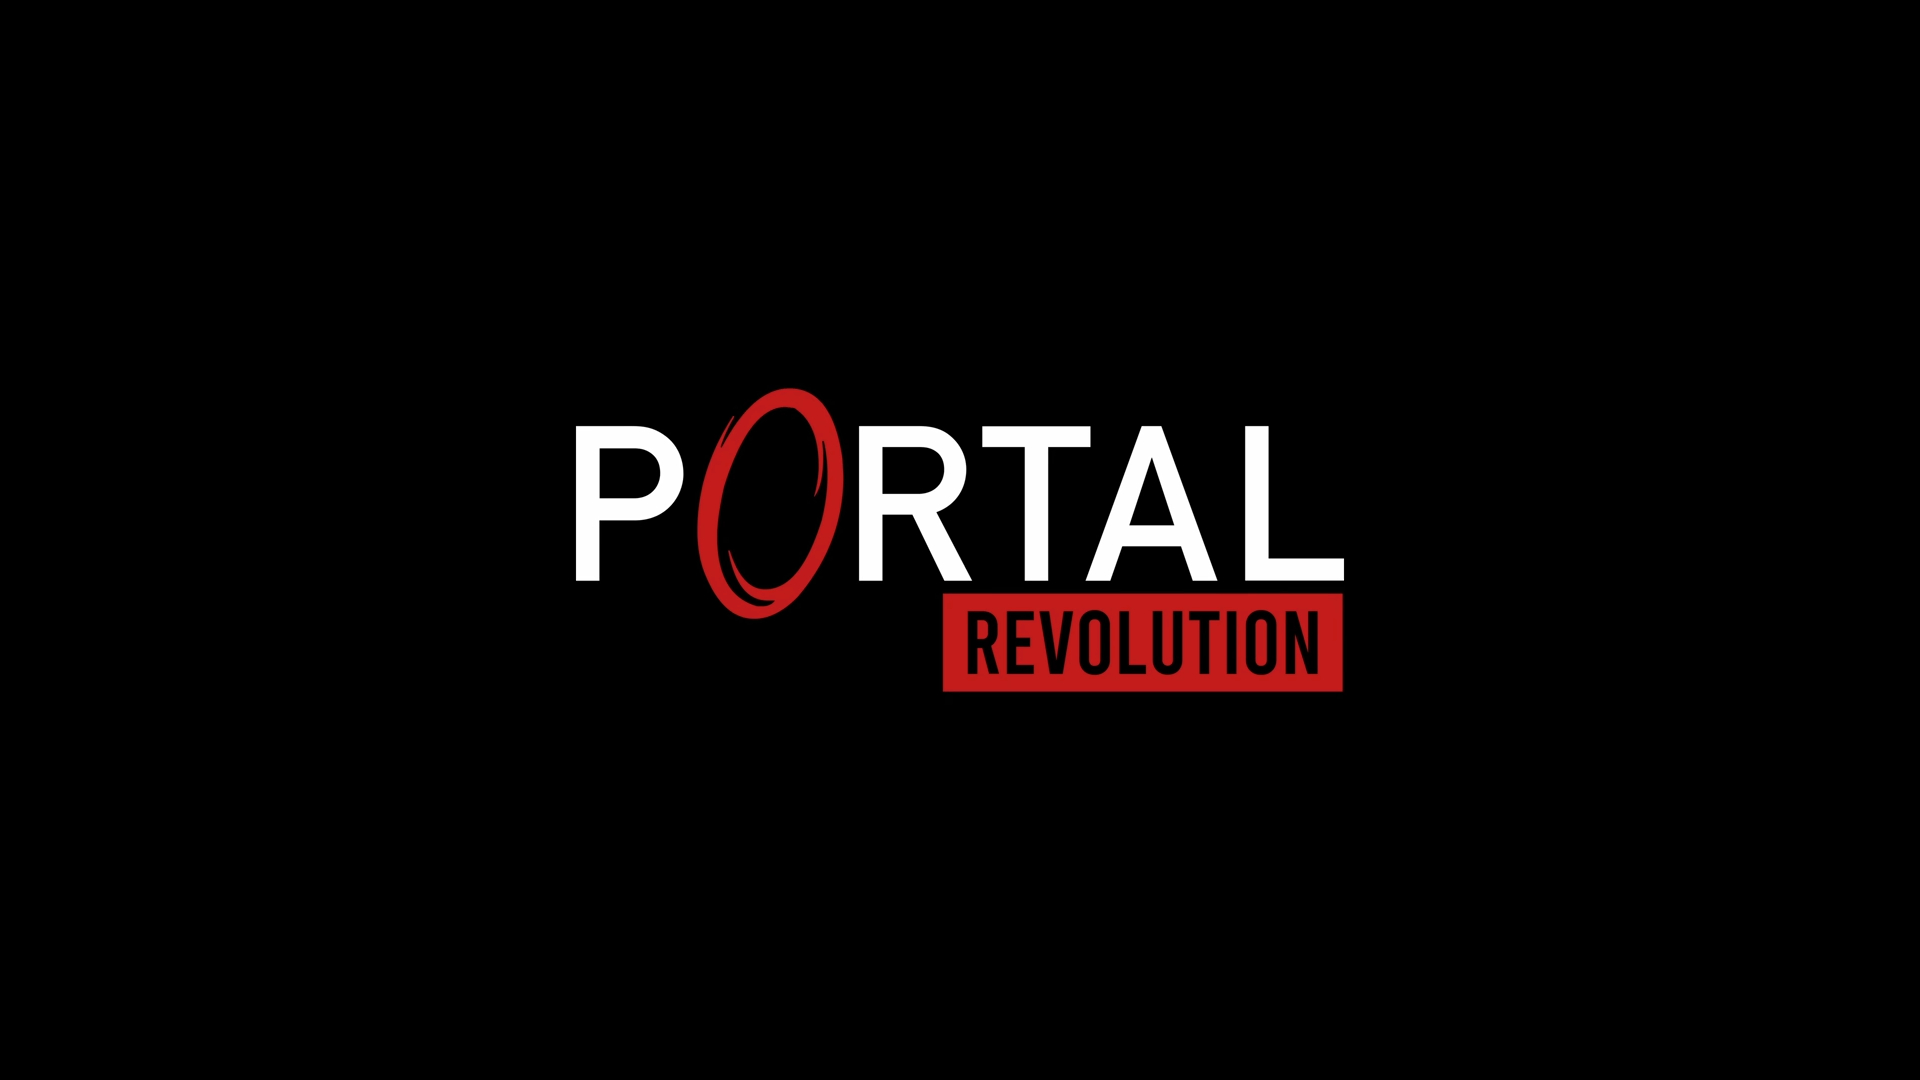 Imagem mostra logomarca do mod Portal: Revolution